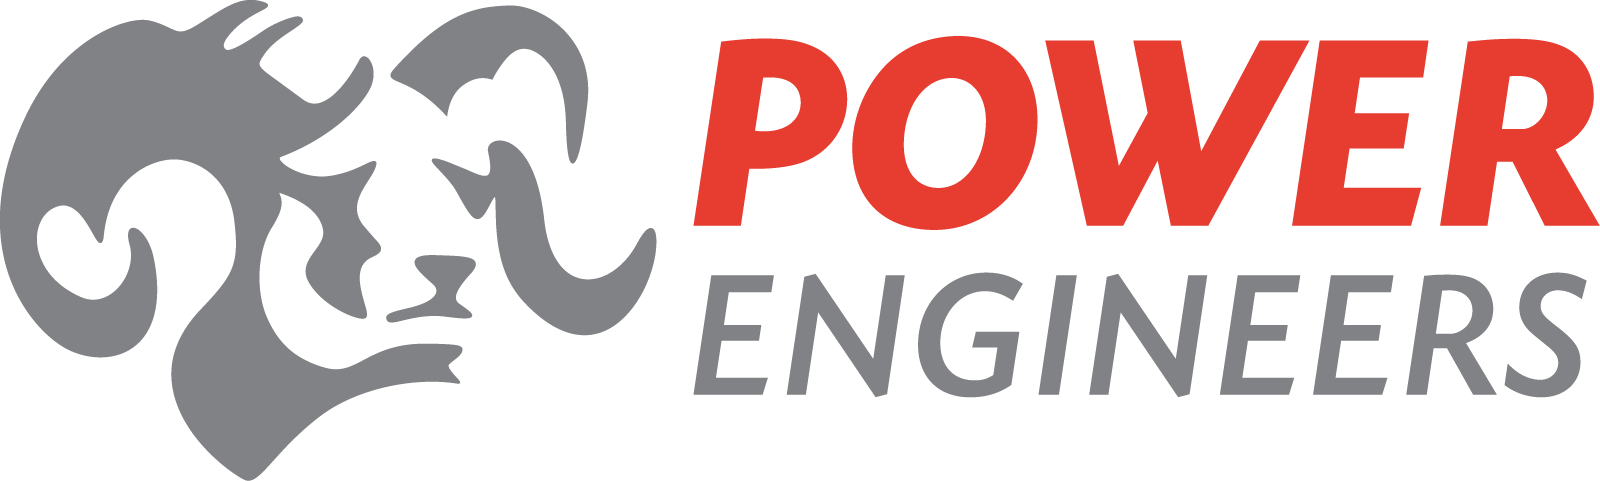 POWER-Engineers-Logo